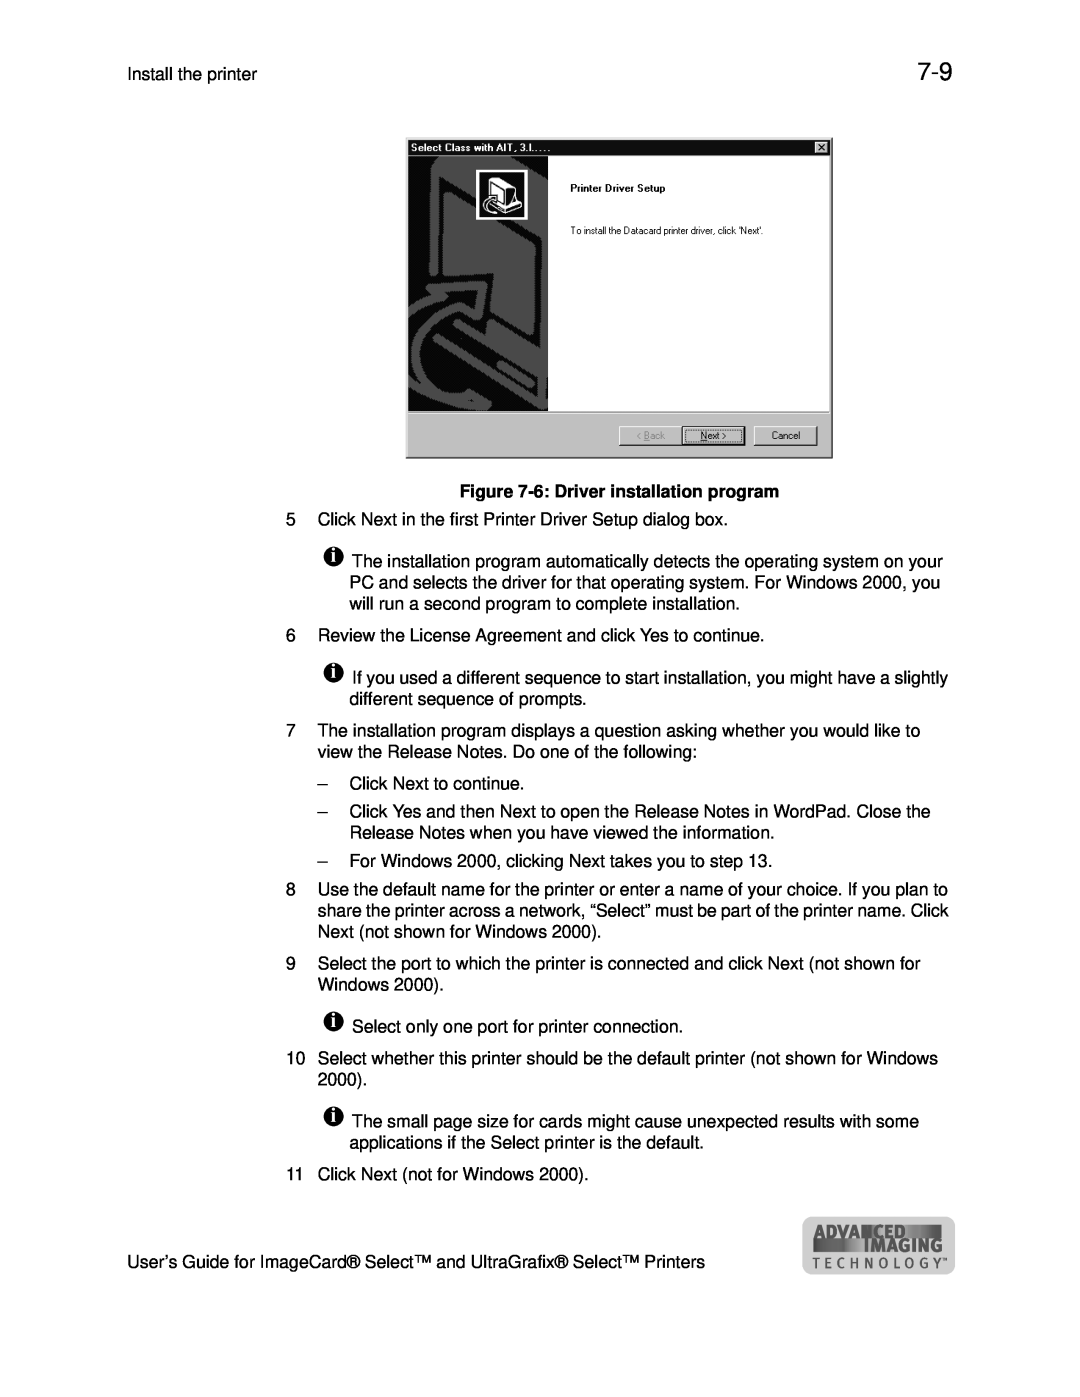 Datacard Group ImageCard SelectTM and UltraGrafix SelectTM Printers manual 6 Driver installation program 